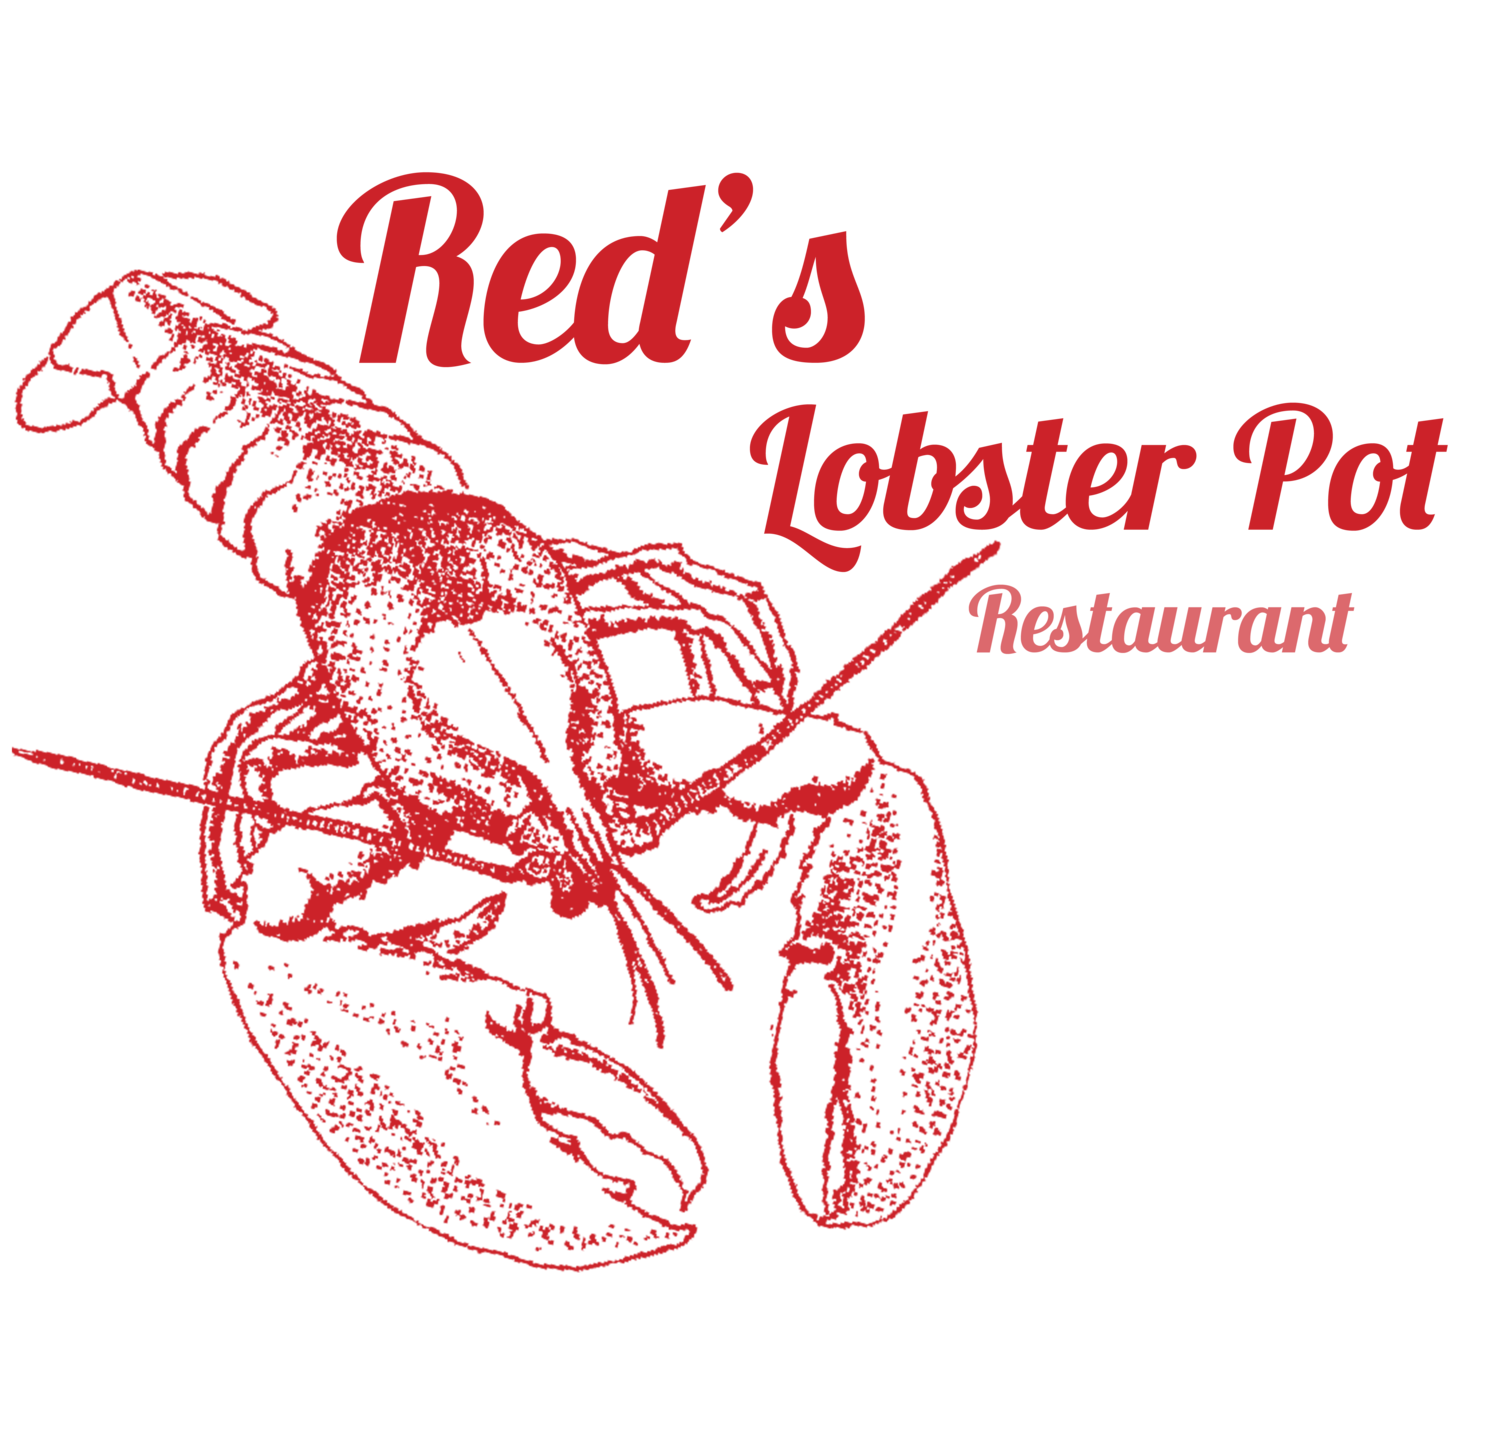 Red's Lobster Pot